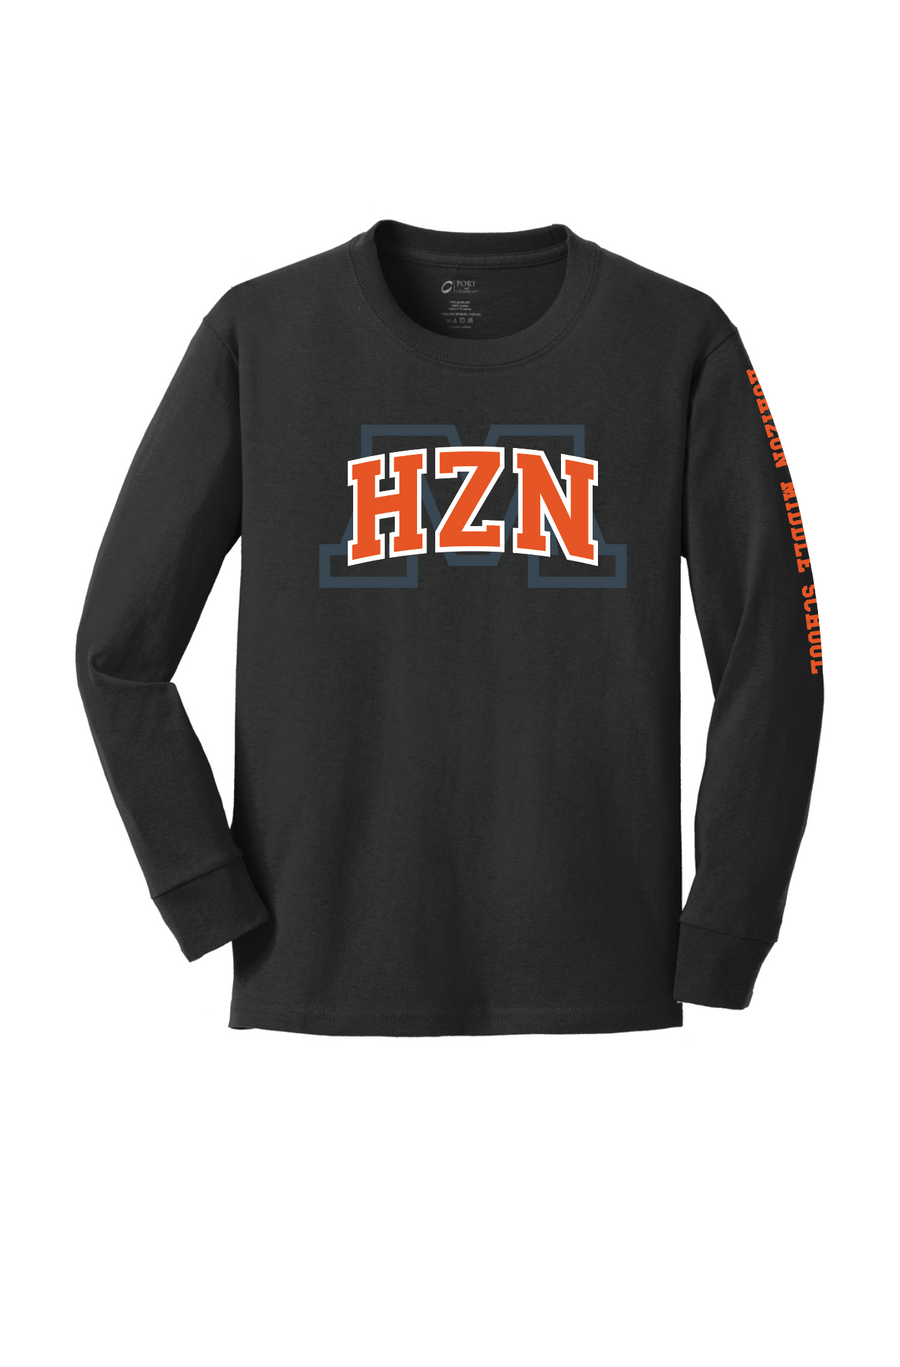 Horizon Middle School Youth Long Sleeve T-Shirt